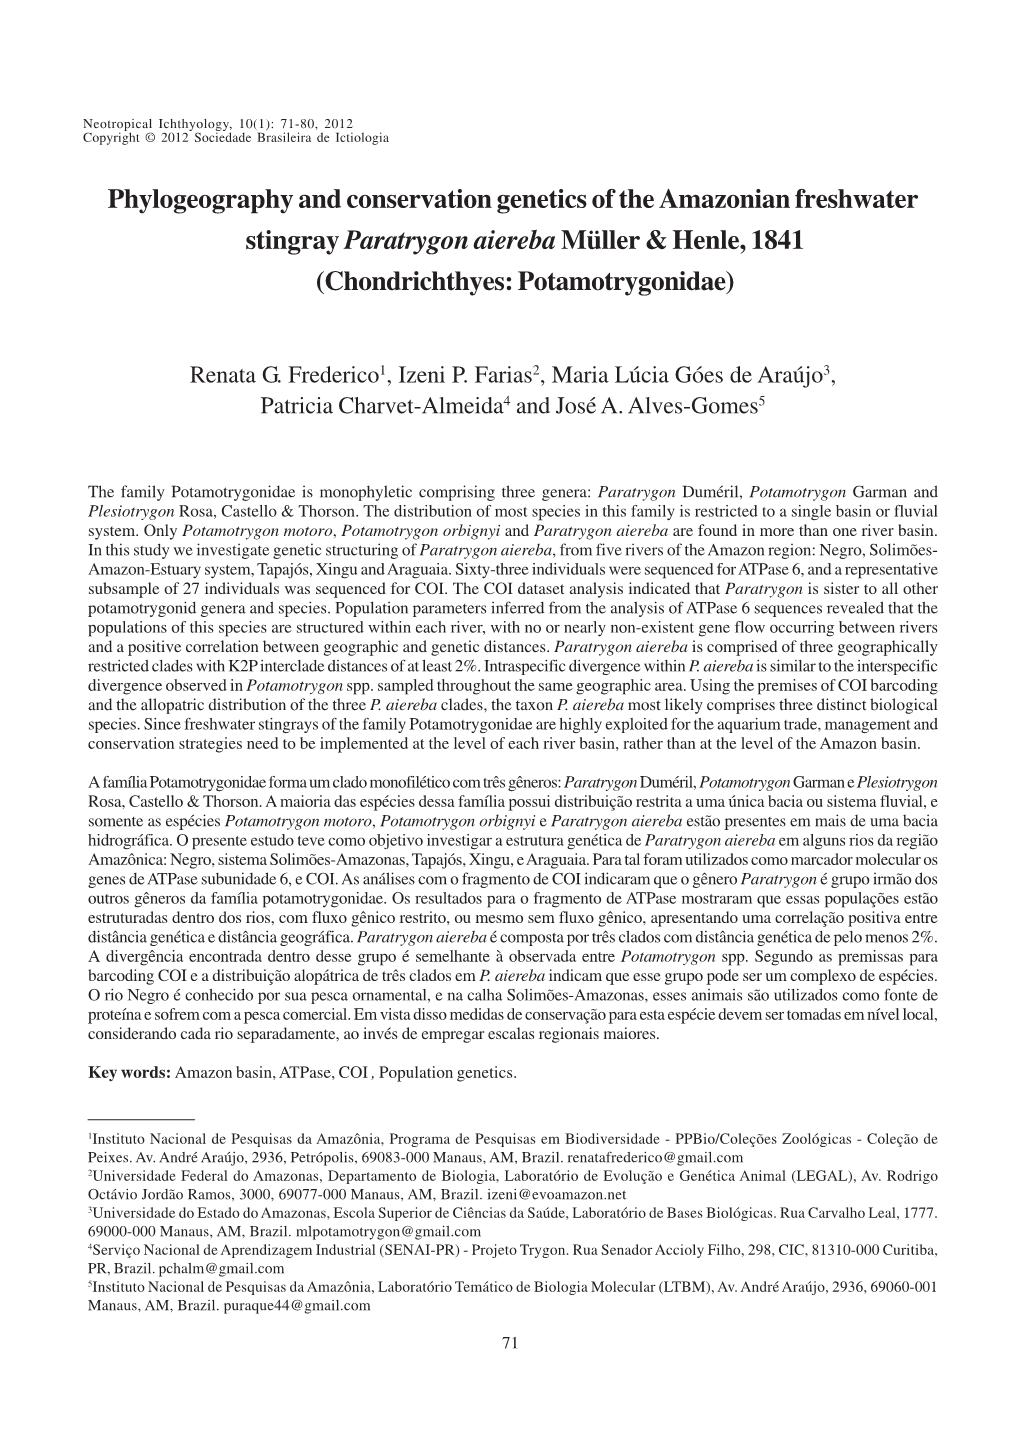 Phylogeography and Conservation Genetics of the Amazonian Freshwater Stingray Paratrygon Aiereba Müller & Henle, 1841 (Chondrichthyes: Potamotrygonidae)